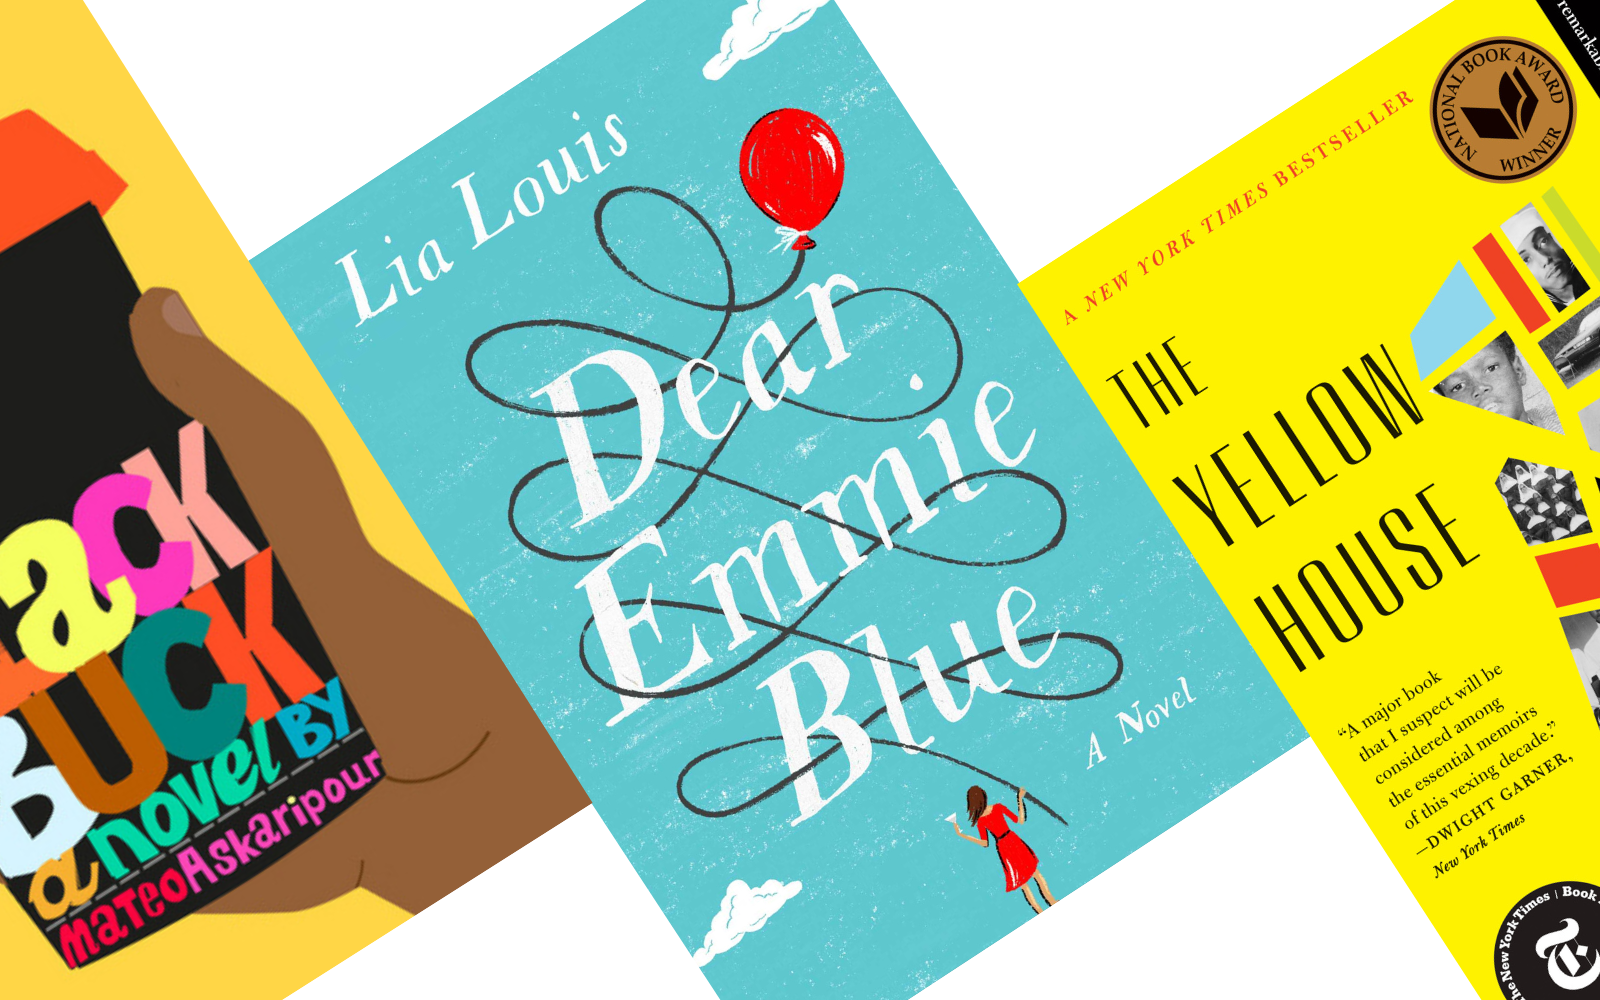 Dear Emmie Blue By Lia Louis Book Review*